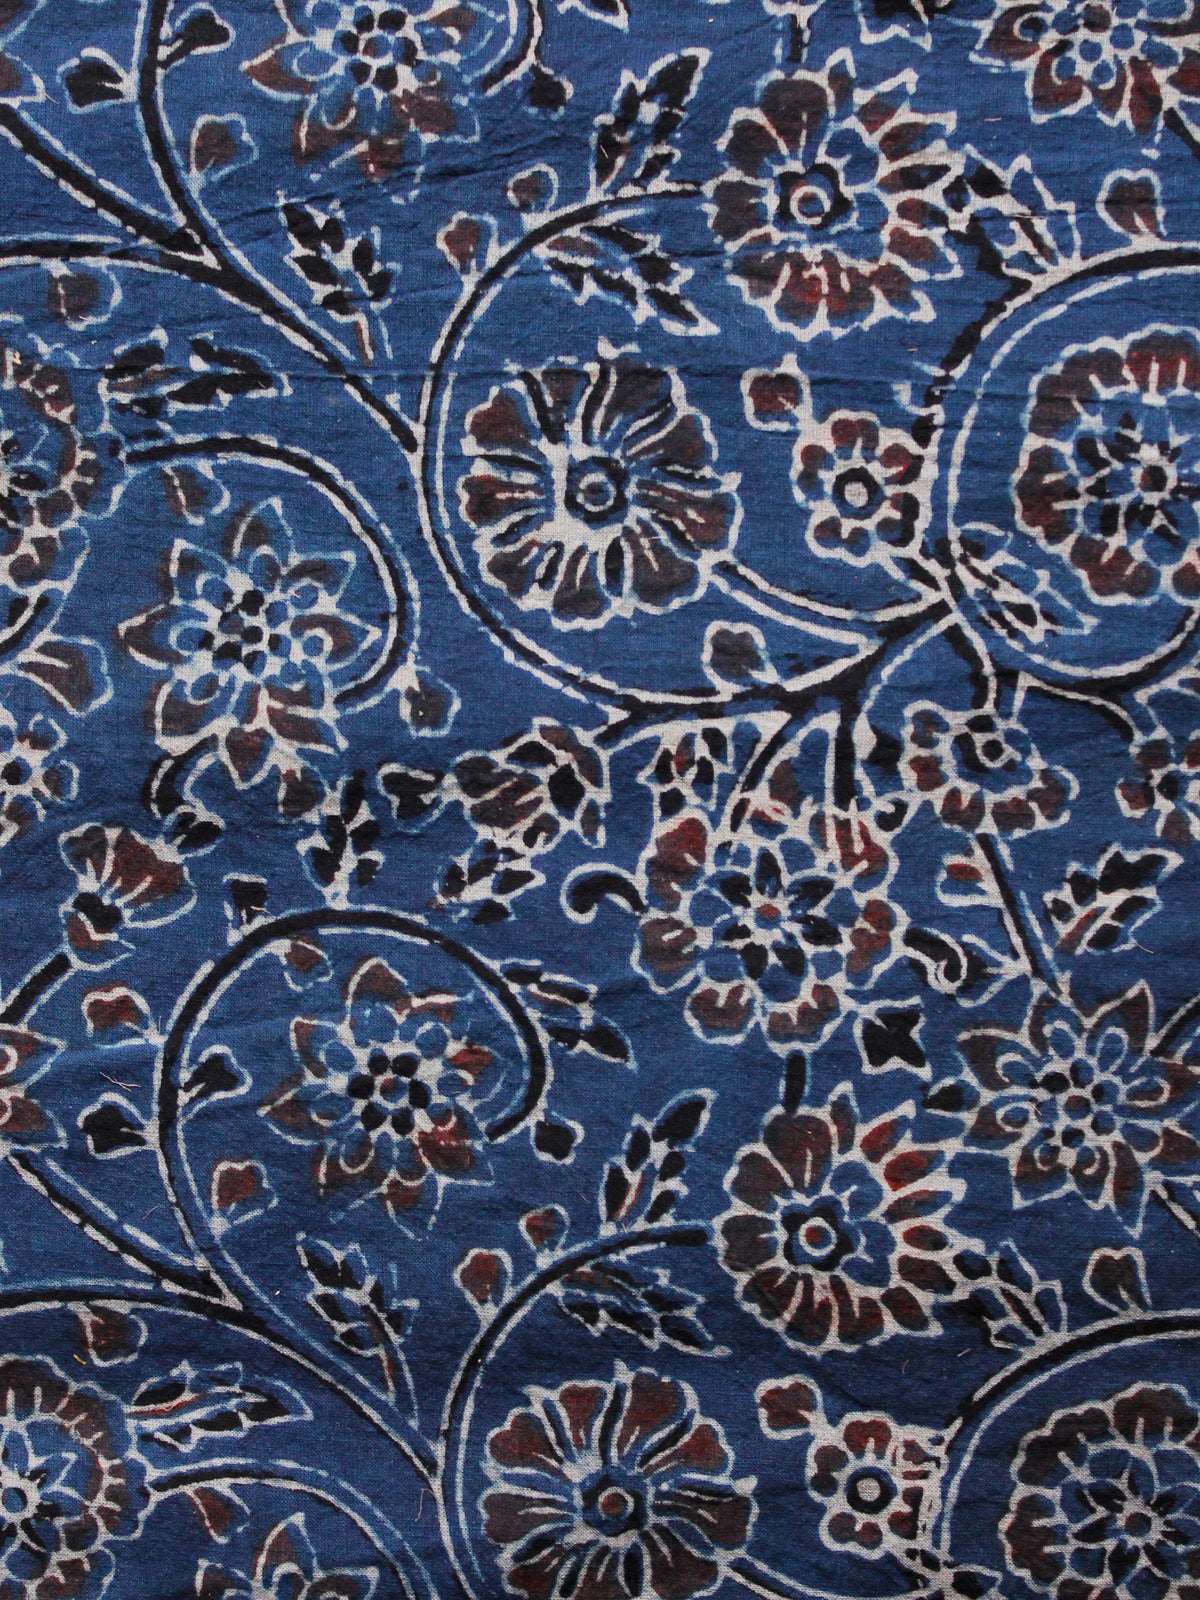 Indigo Maroon Ivory Black Ajrakh Hand Block Printed Cotton Fabric Per Meter - F003F1639